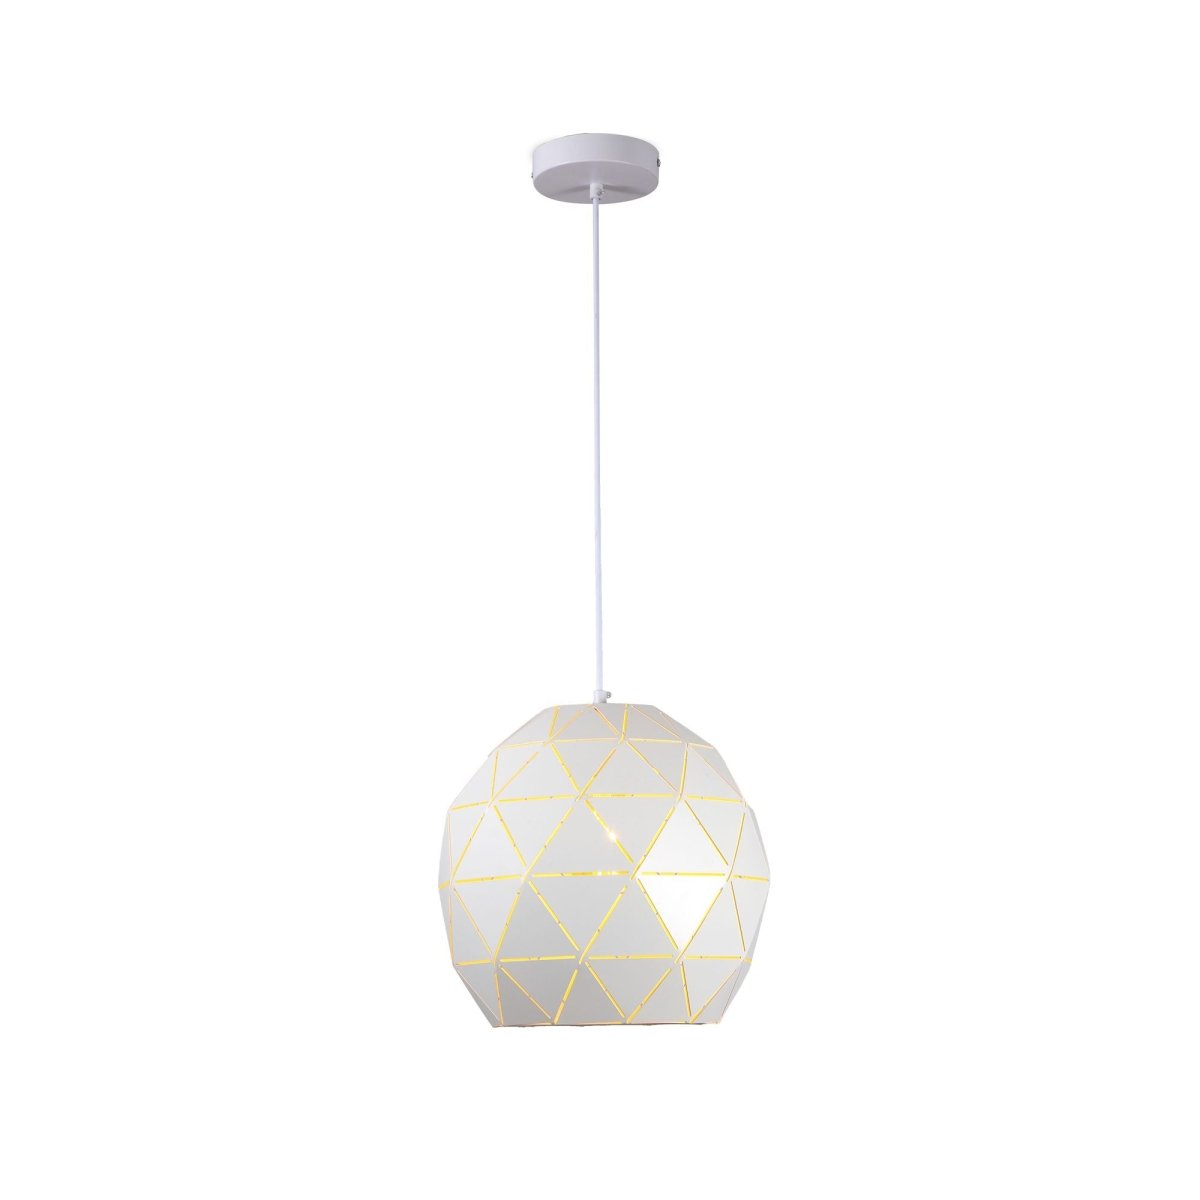 White metal globe pendant light with e27 fitting main